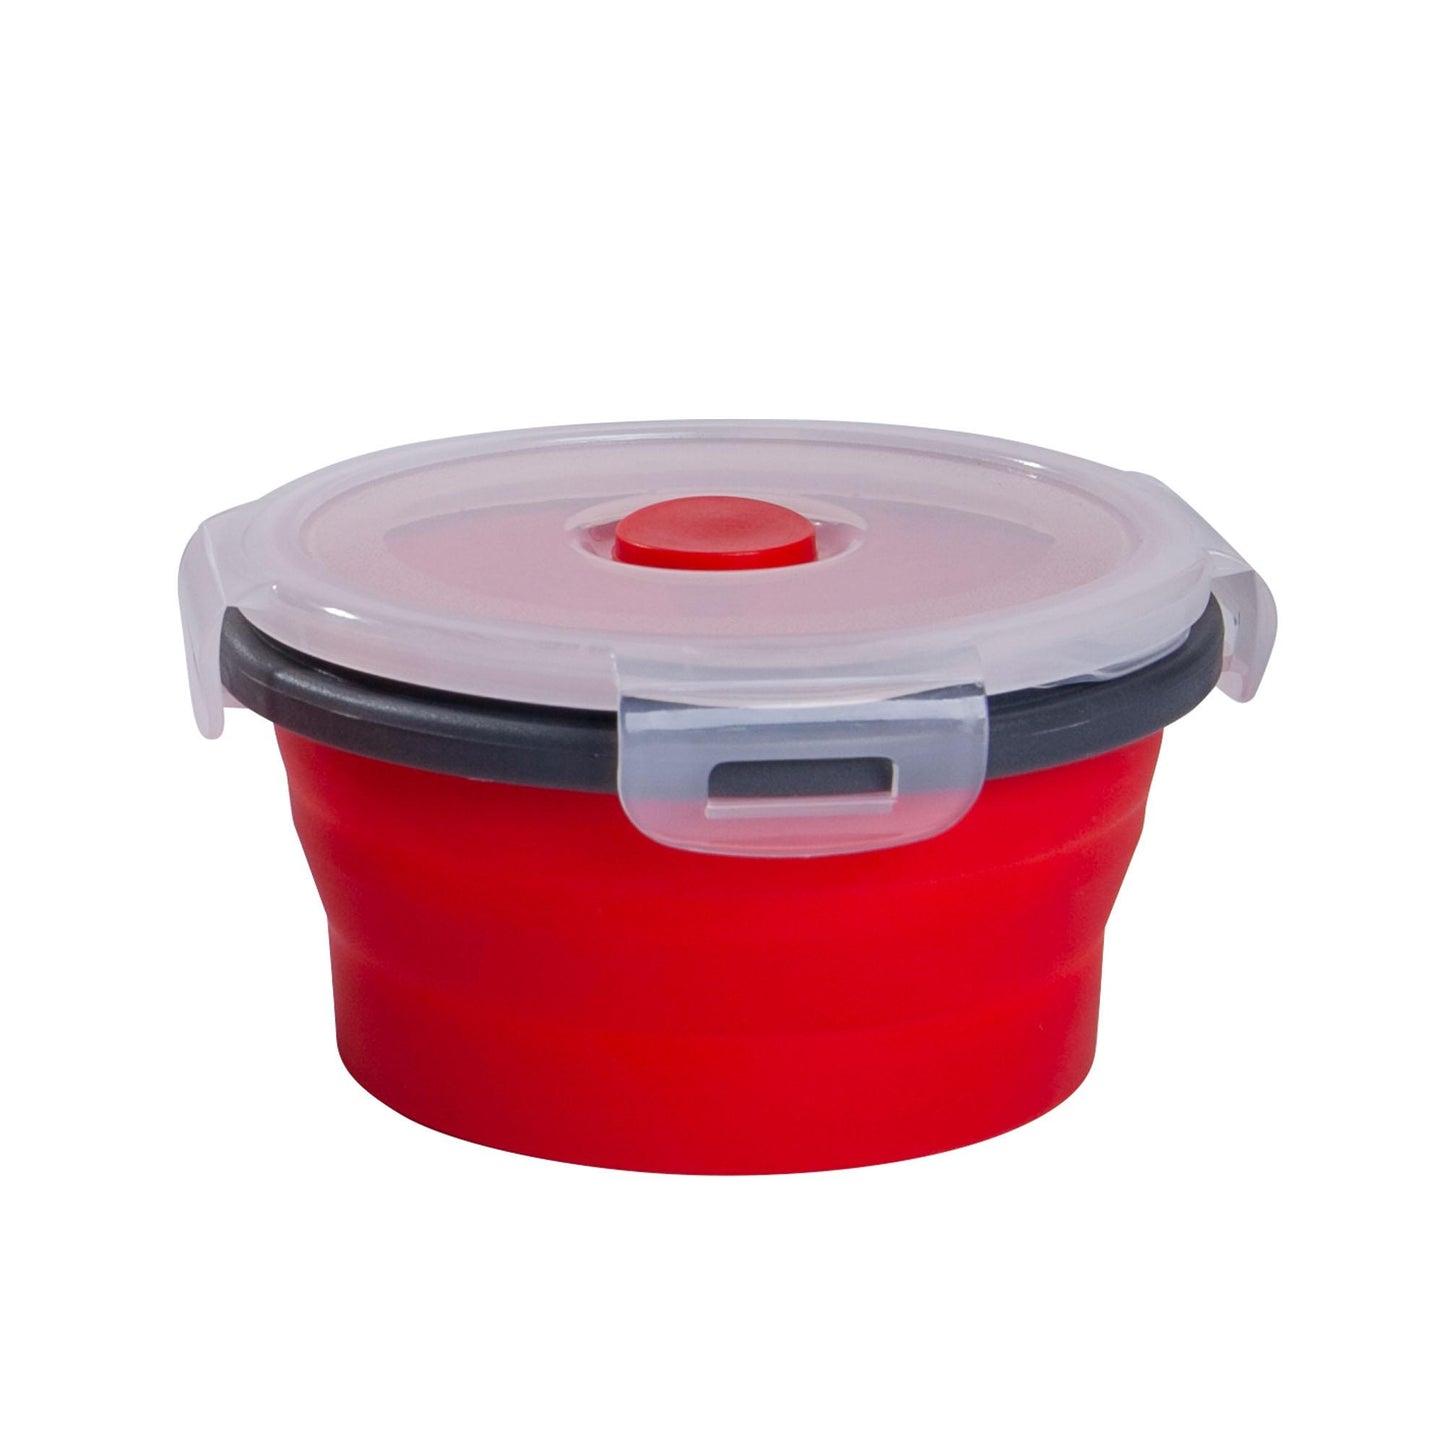 mixcover Líquido cefalorraquídeo plegable con tapa hecha de silicona bentobox lonchera caja de almuerzo picnic tazón de campamento bpa espacio sin espacio ahorrador de 350 ml rojo rojo